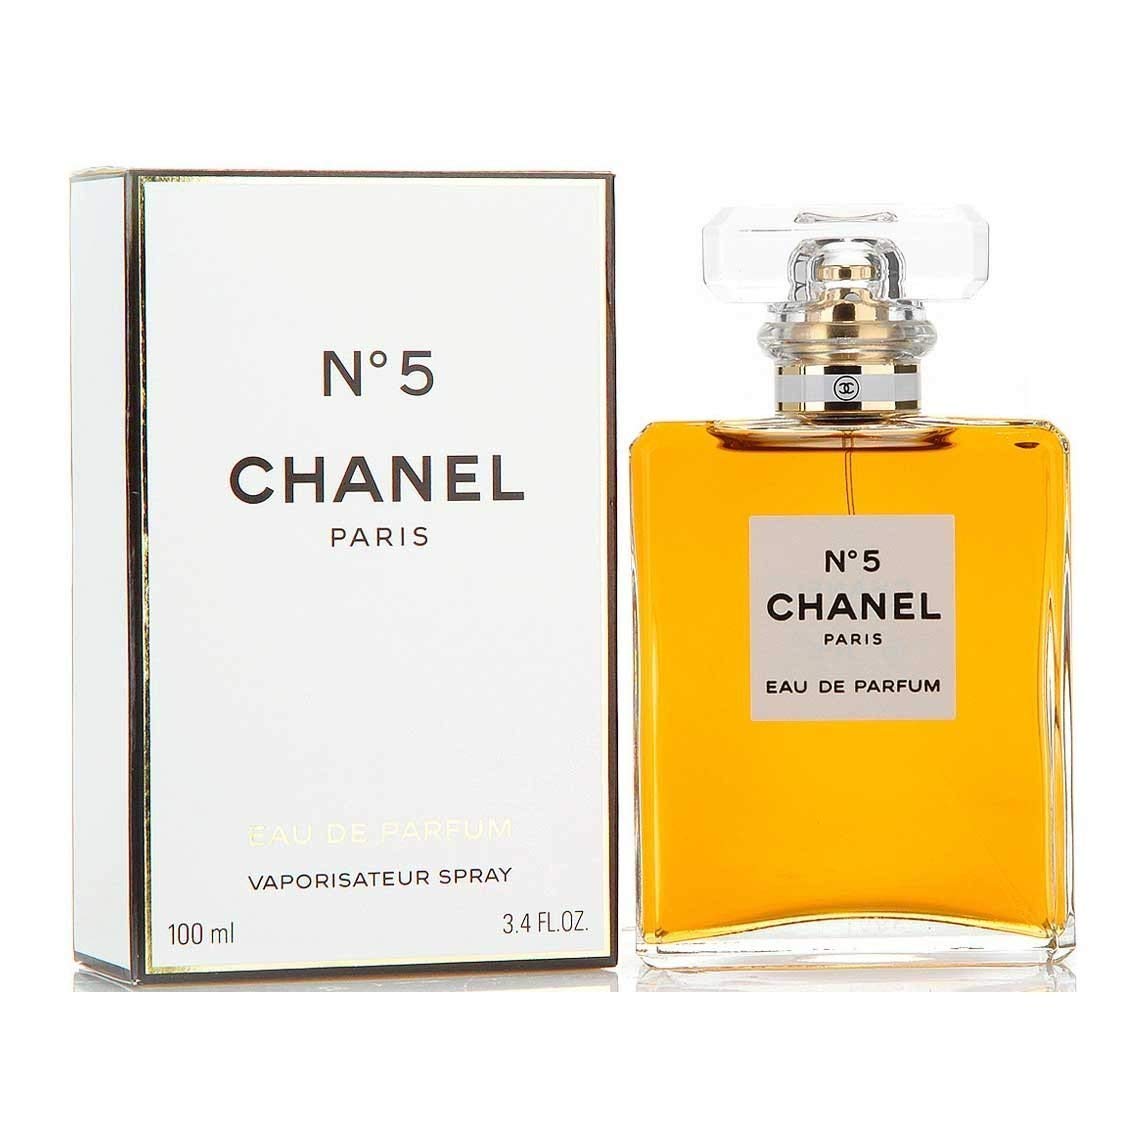 CHANEL NO.5 Eau De Parfum 3.4 oz 100ml Used